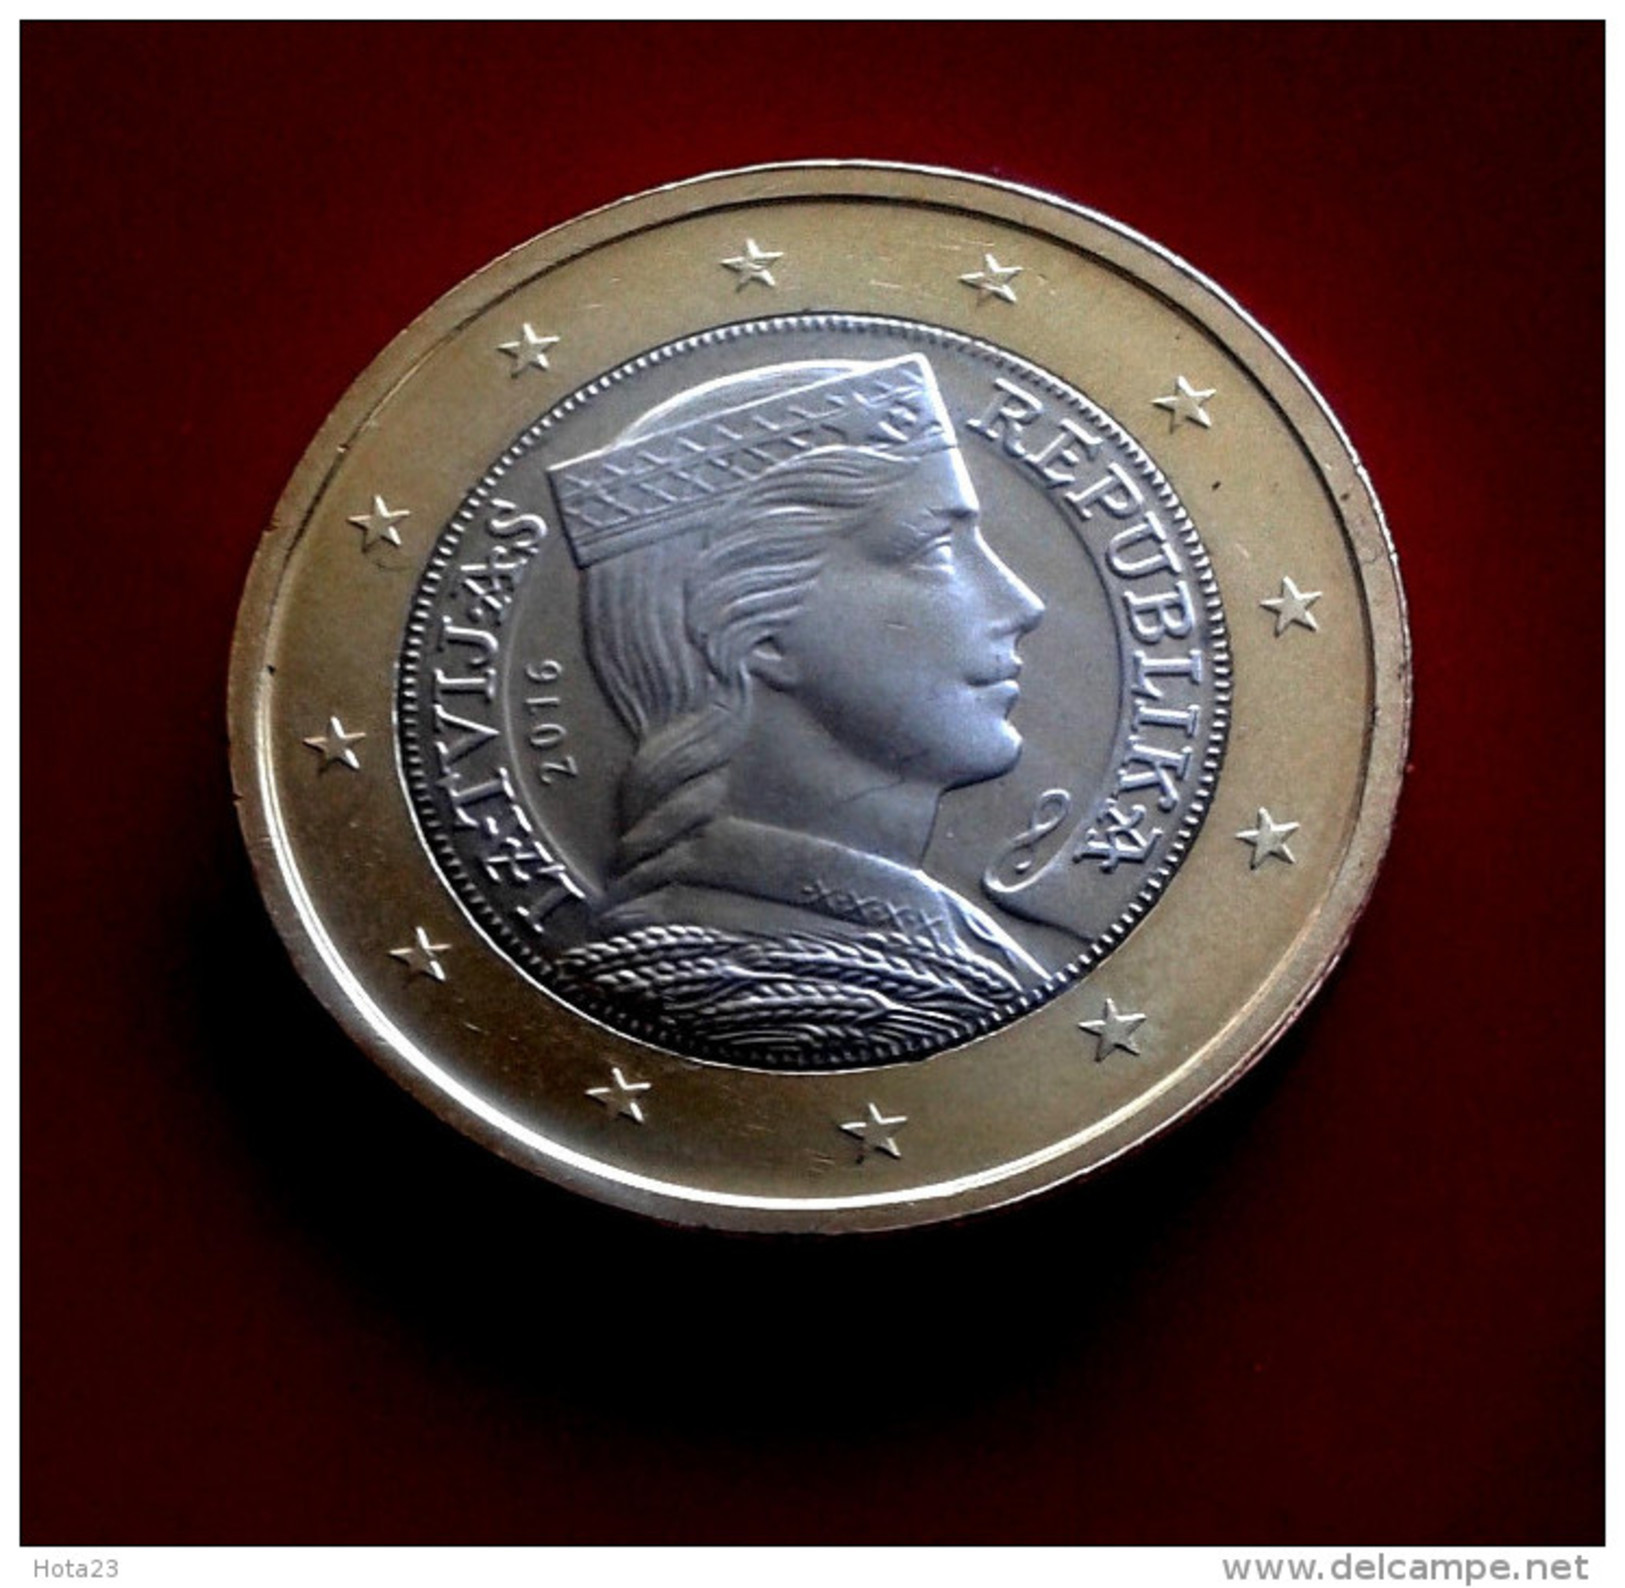 1 Coin Lettland Latvia Lettonia 2016 1 Euro UNZ UNC Münze MINT RARE Latvian - Letonia